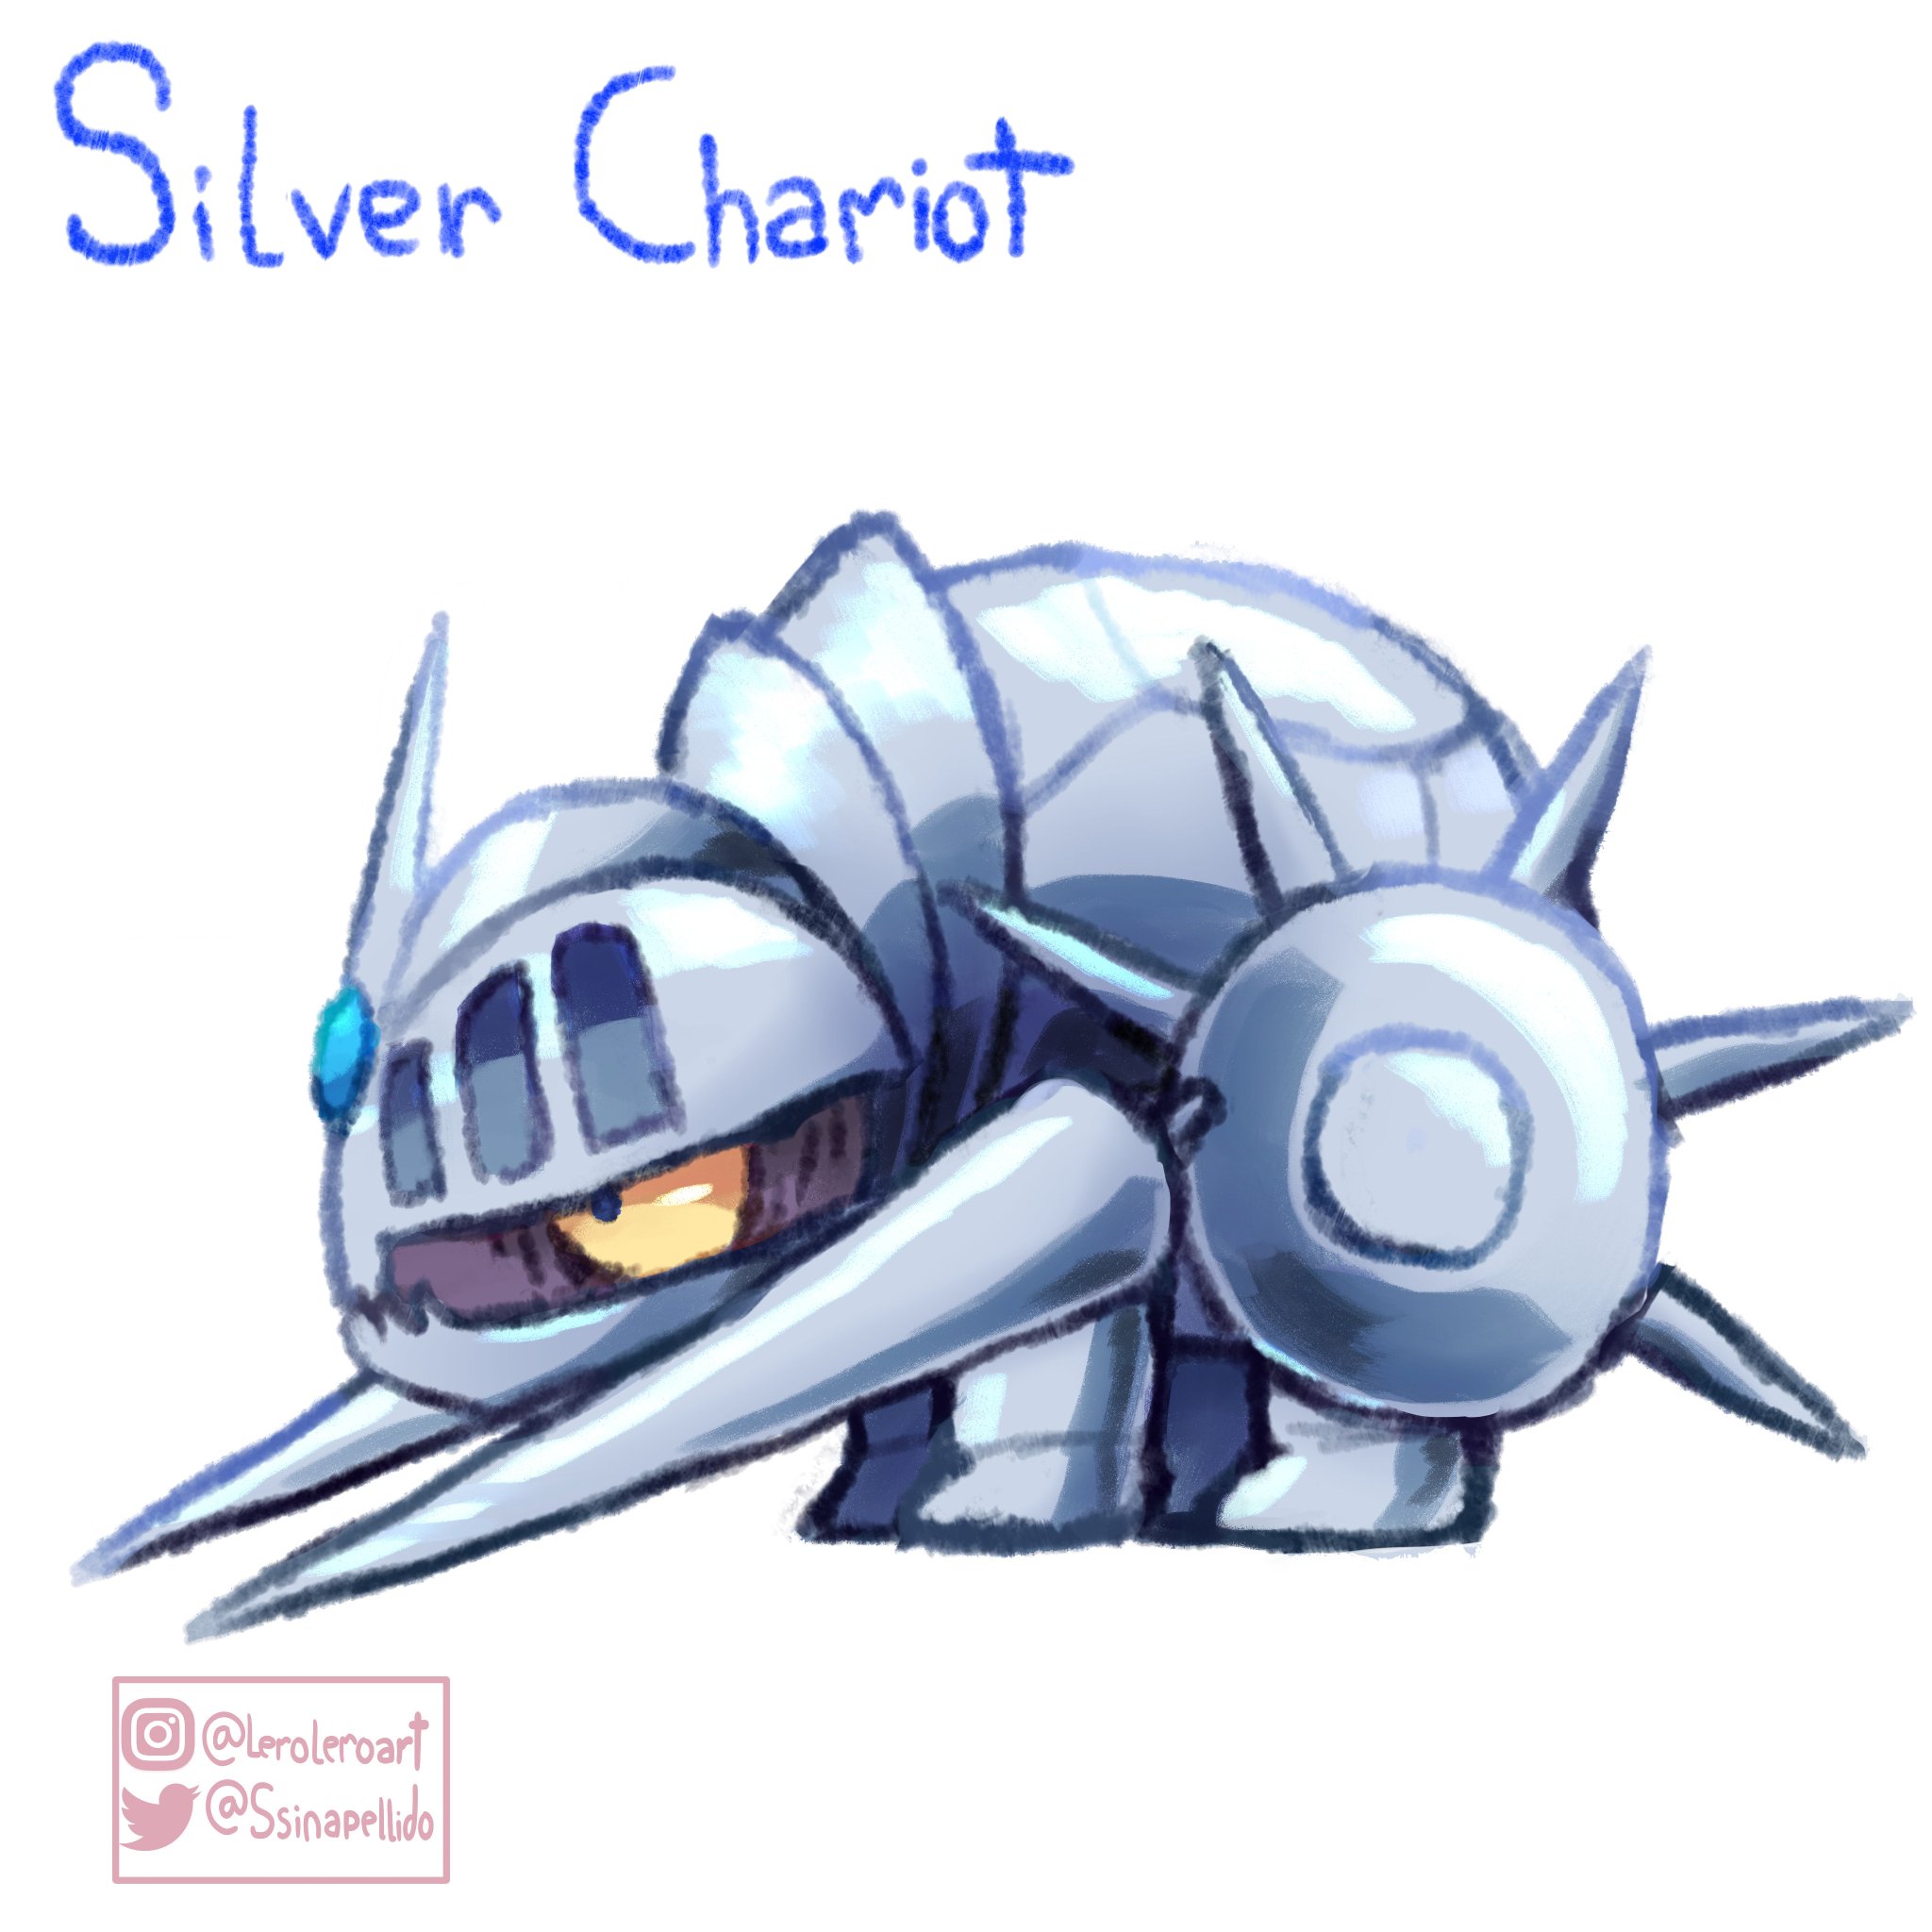 Pokemon Silver chariot requiem